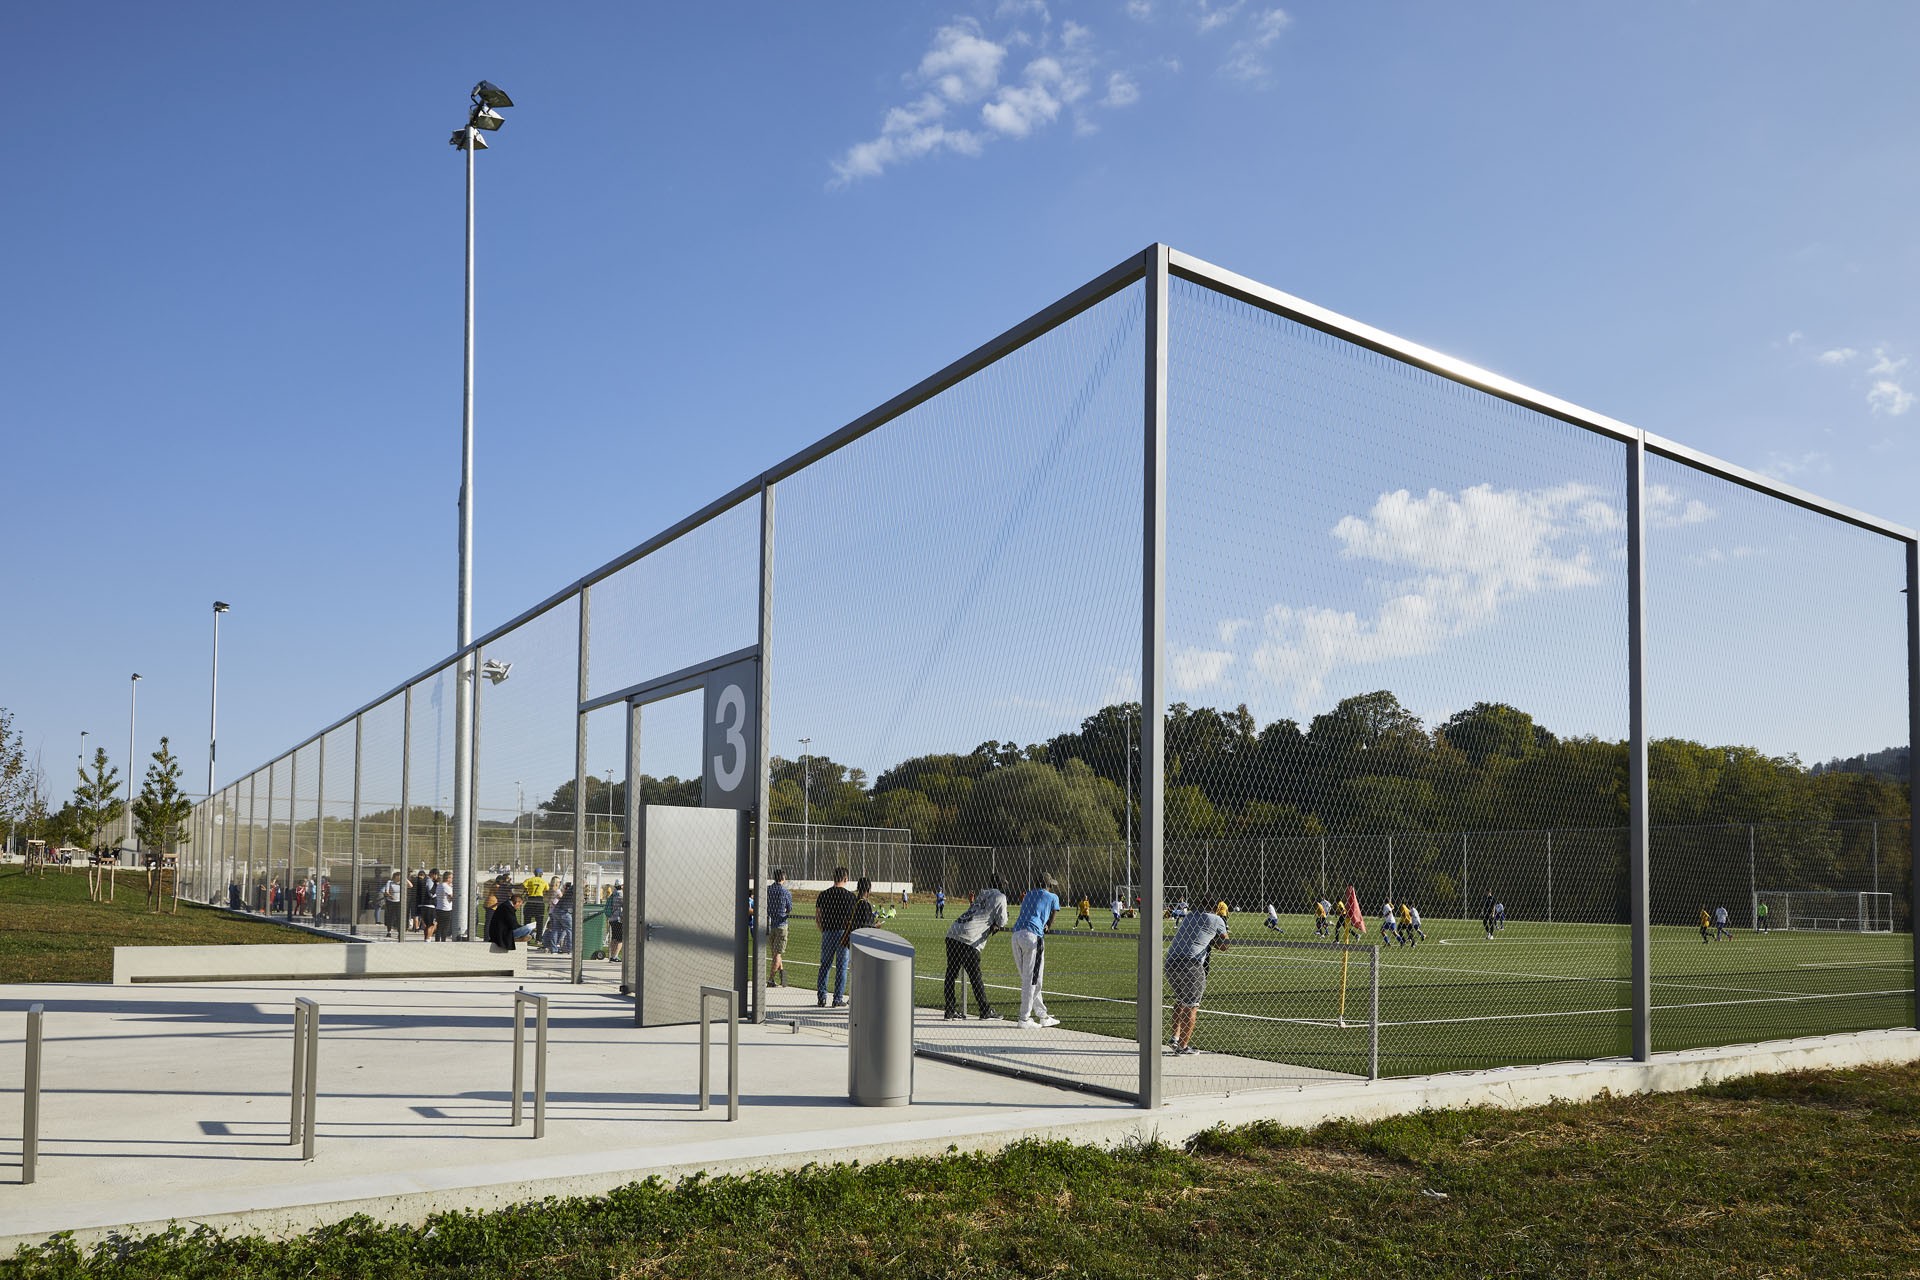 Ballfangzaun an einem Fußballfeld mit nahezu transparentem Netz